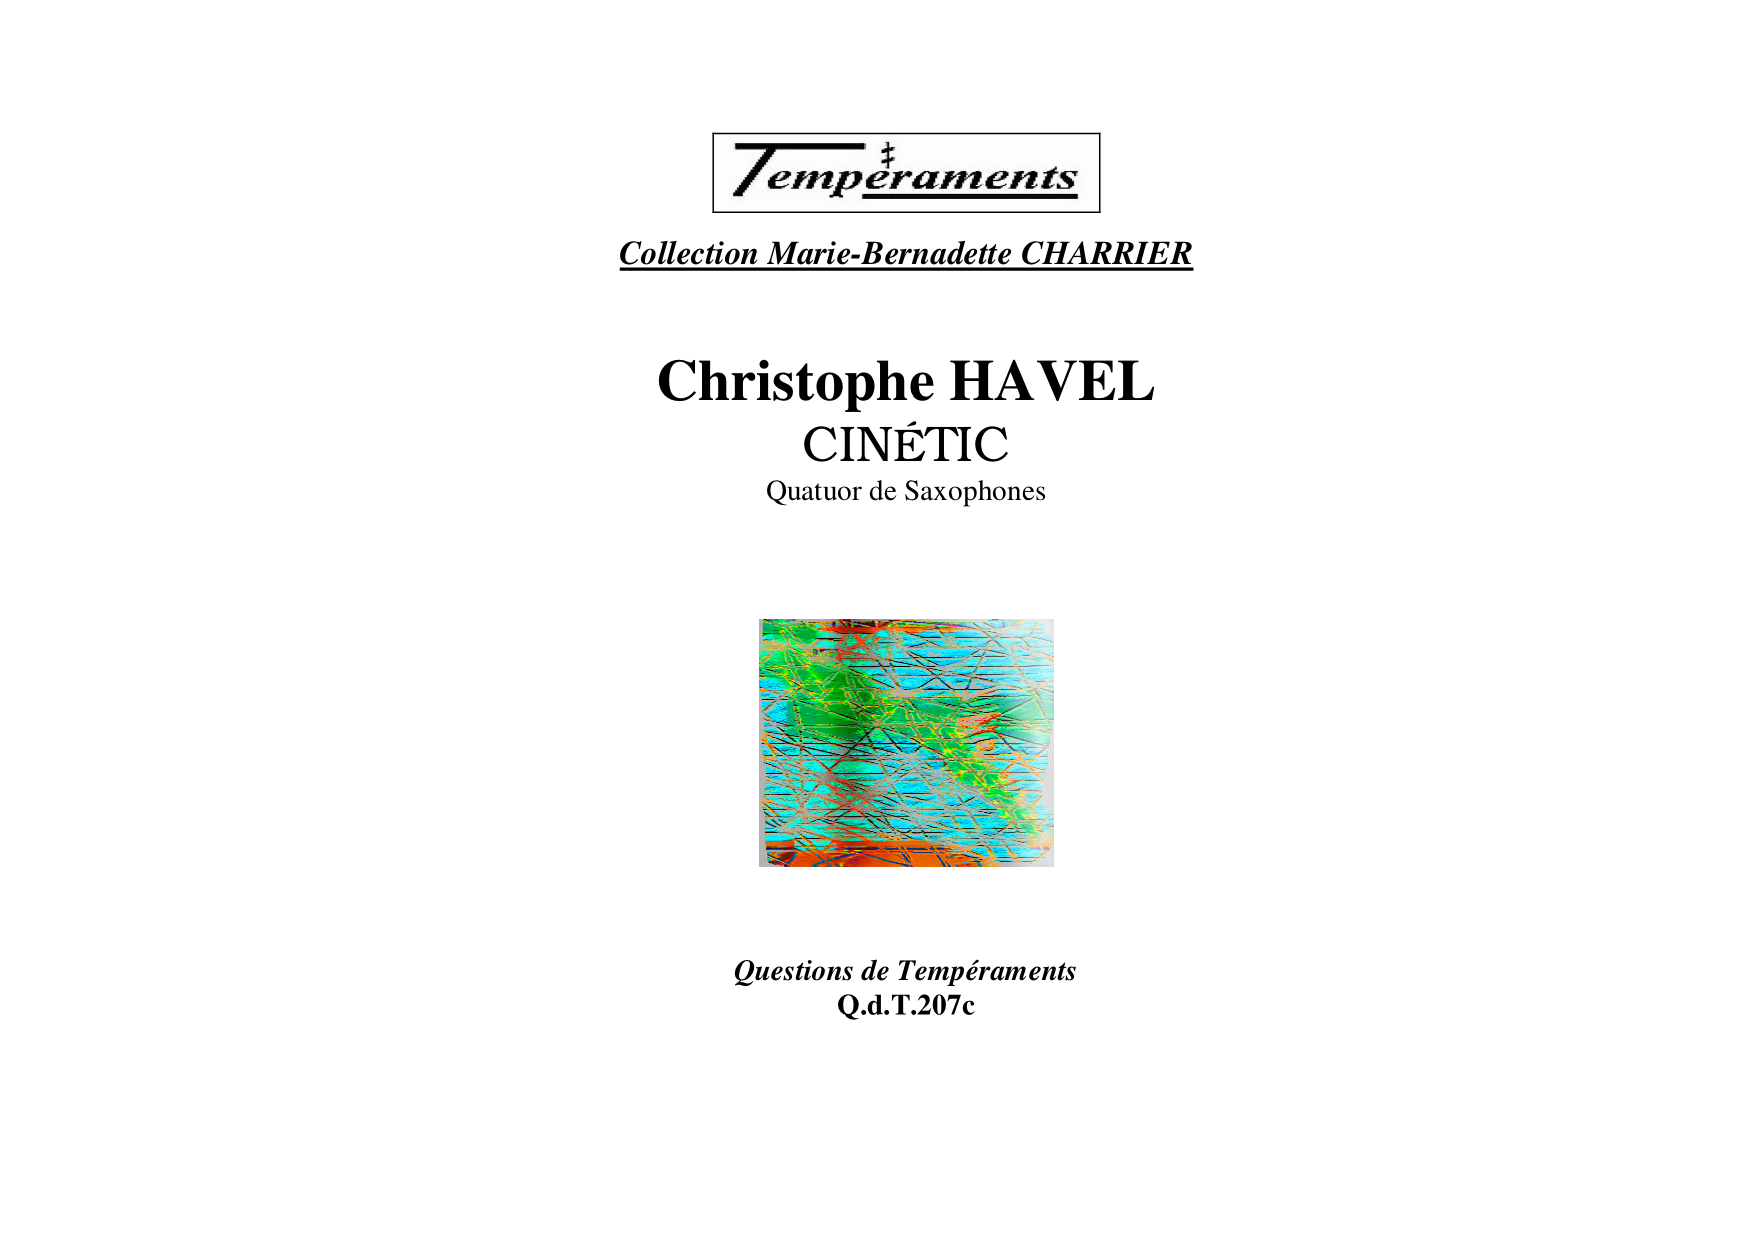 Cinetic Cristophe Havel A4 3 1 450